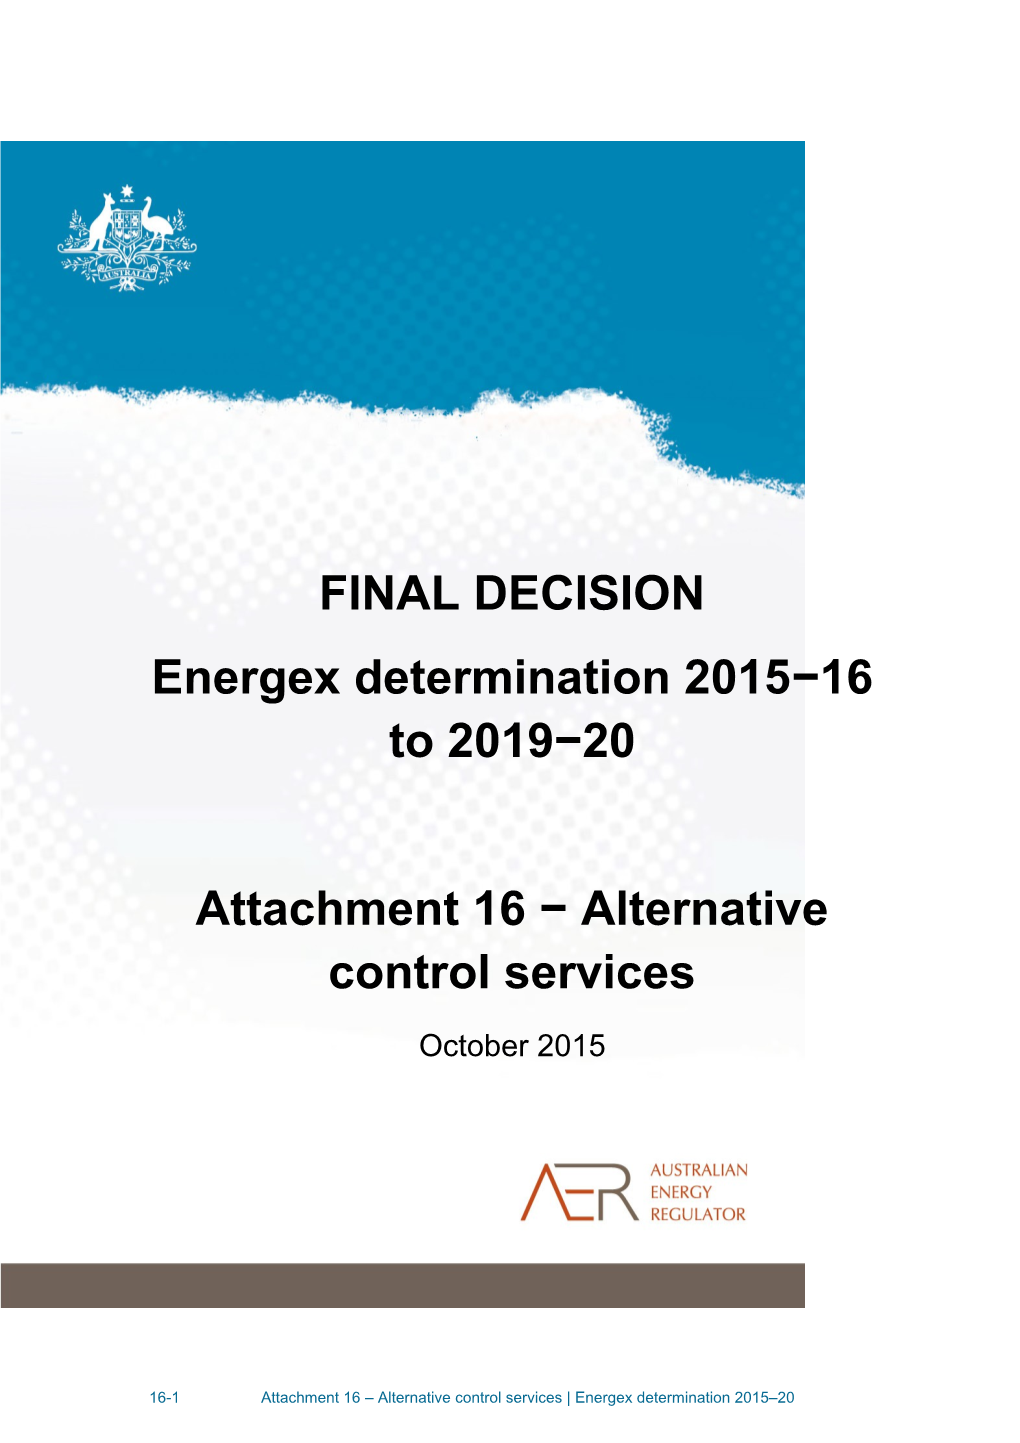 AER - Final Decision Energy - Attachment 16 - Alternative Control Services - October 2015